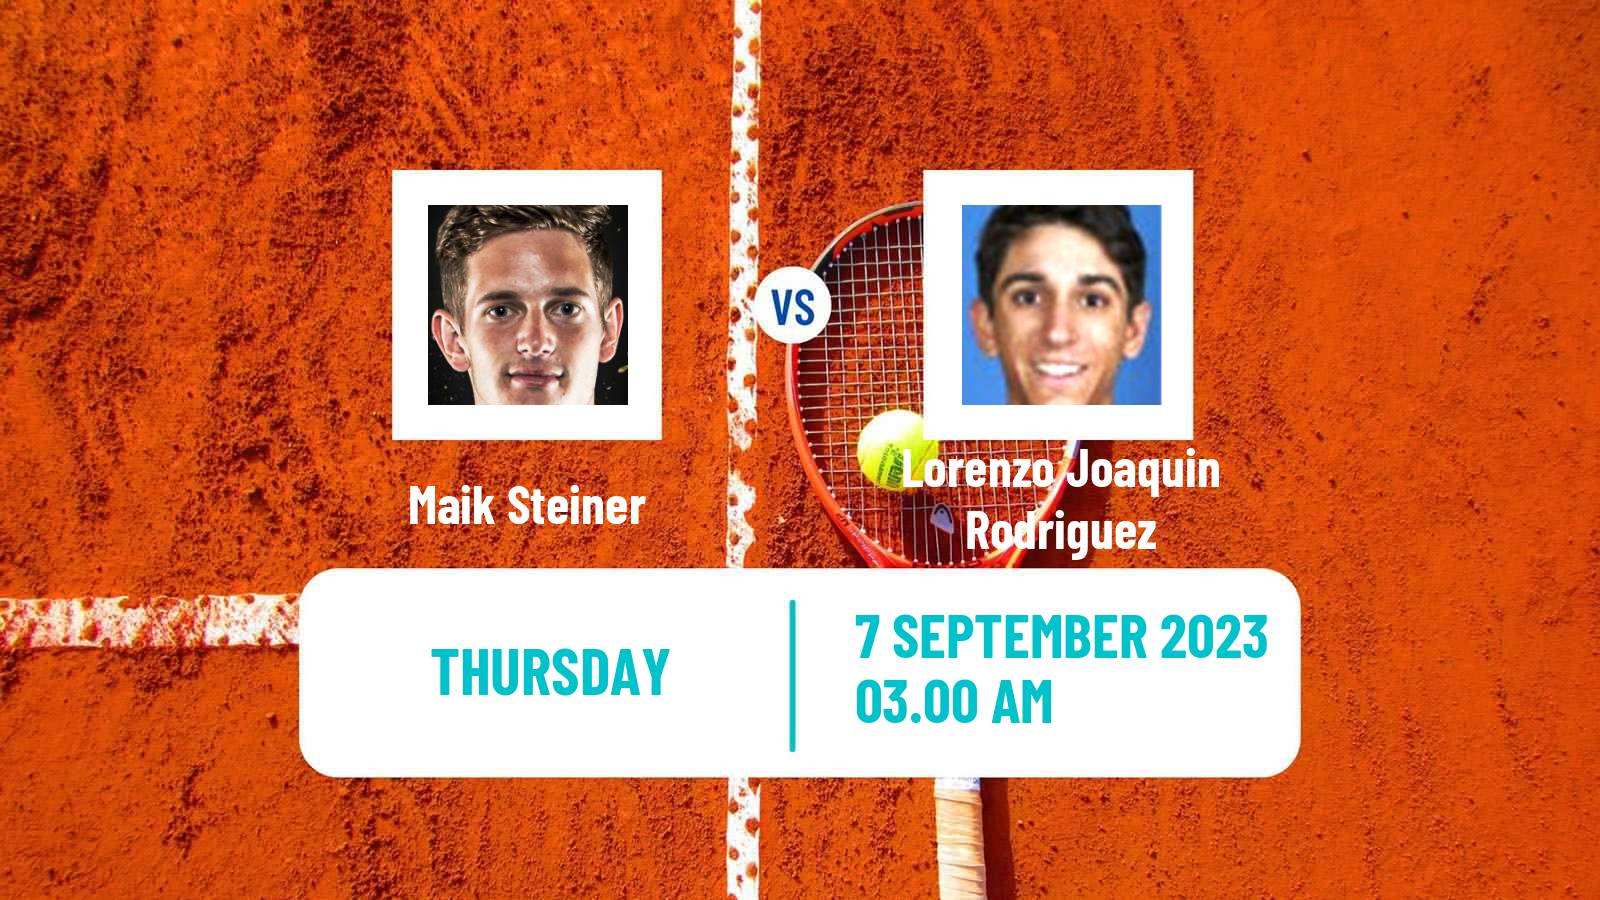 Tennis ITF M15 Constanta 2 Men Maik Steiner - Lorenzo Joaquin Rodriguez